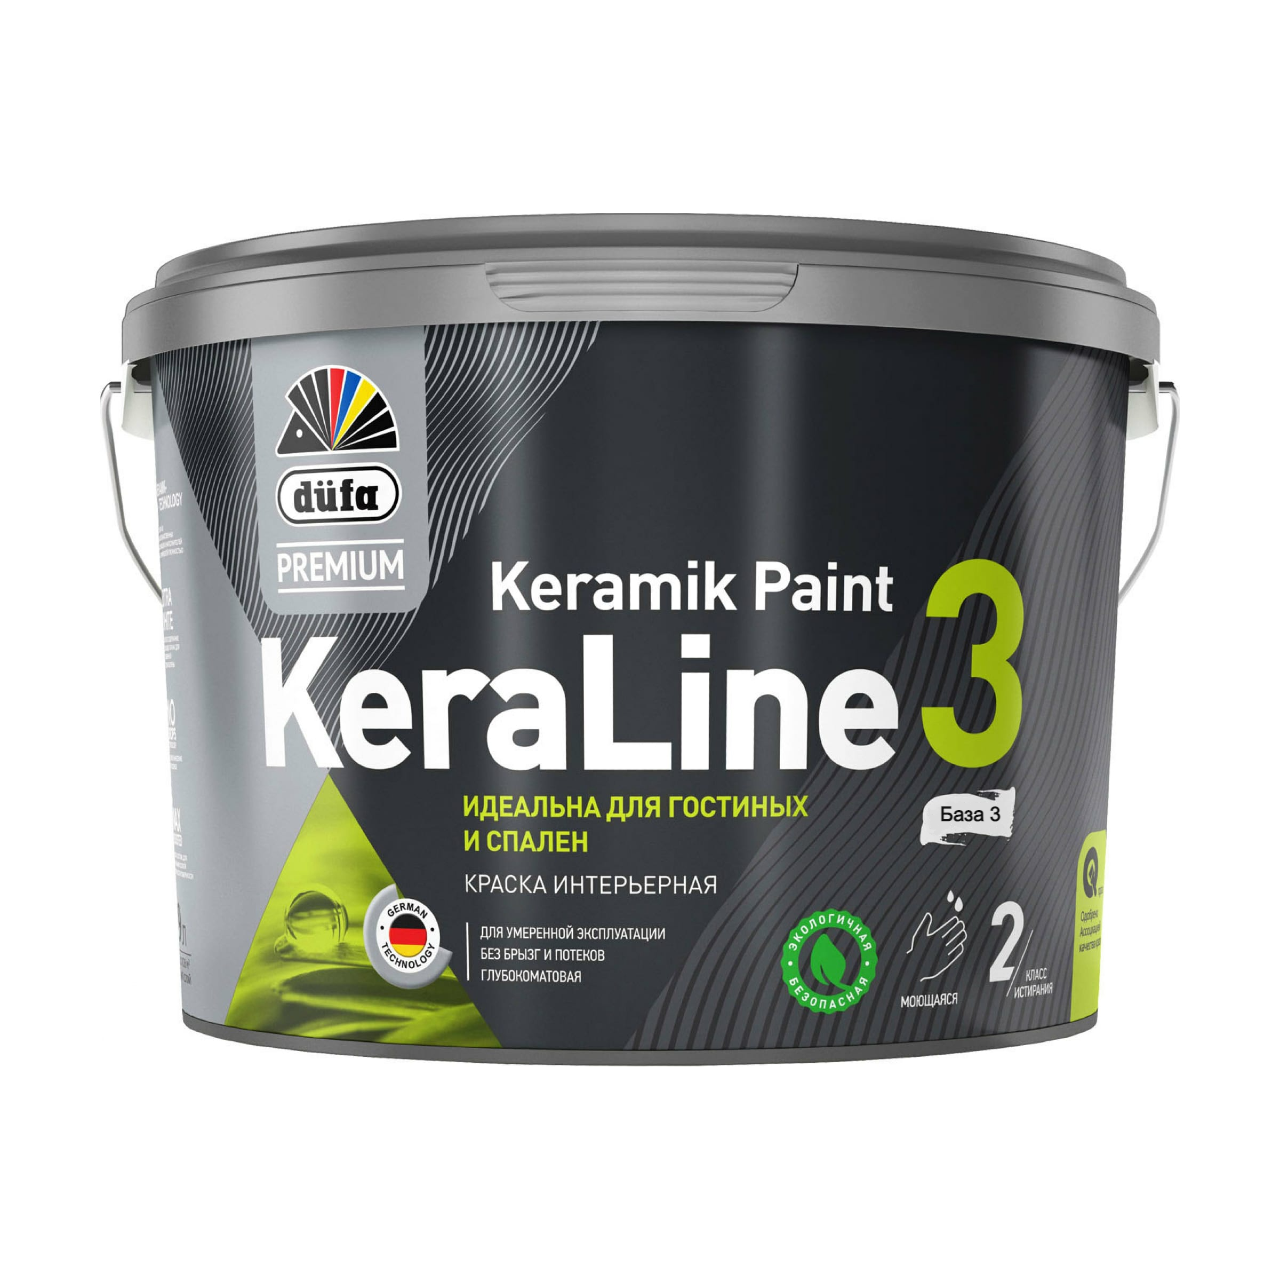 90190611 Краска для стен и потолков Premium KeraLine Keramik Paint 3 глубокоматовая белая база 1 2.5 л STLM-0126762 DUFA